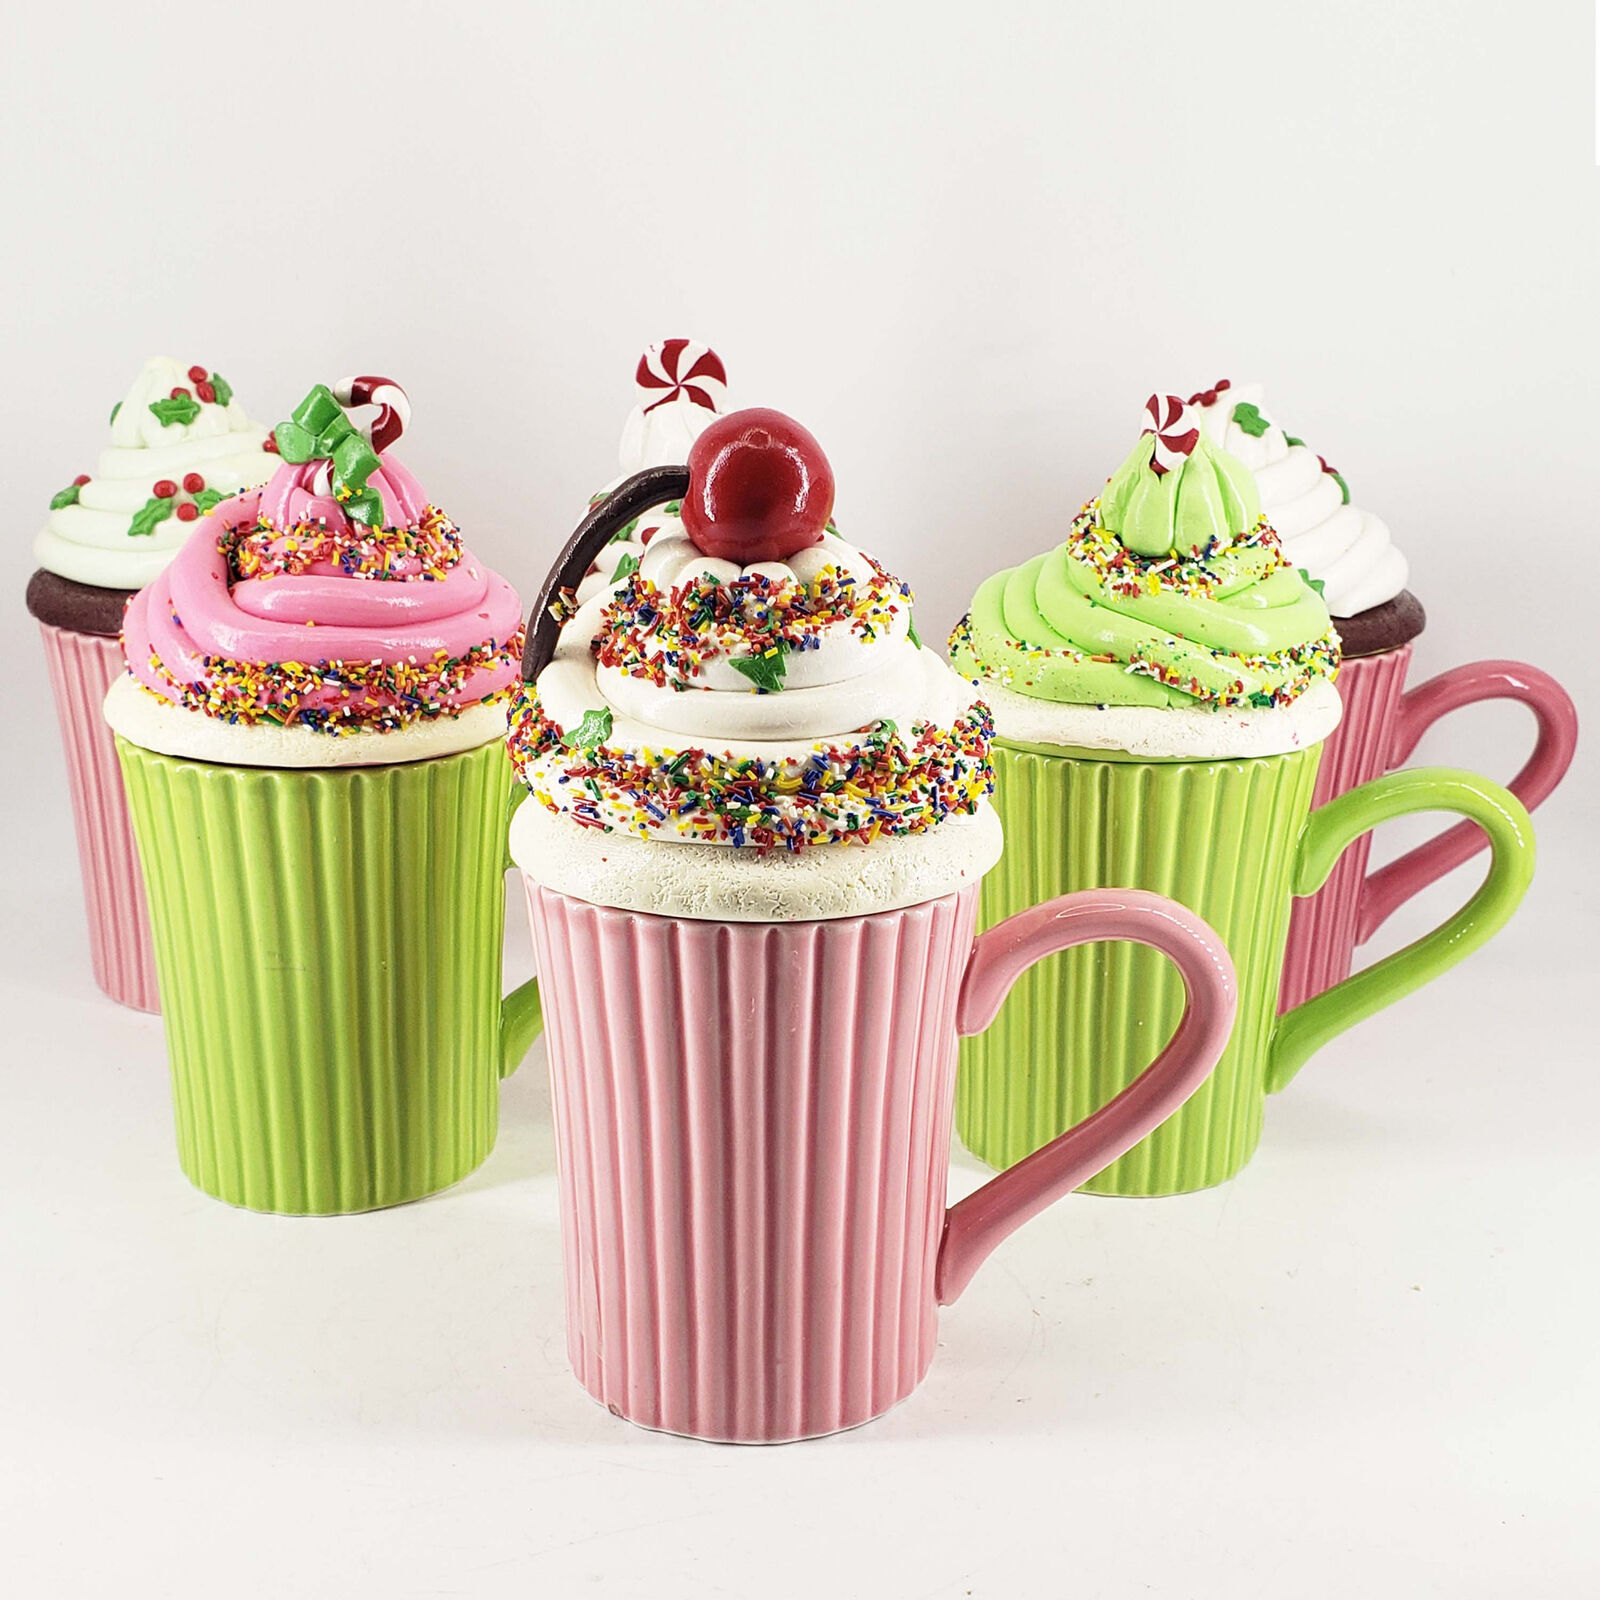 6 Ganz Cupcake Hot Chocolate Whipped Cream candy cane sprinkles mugs w lids